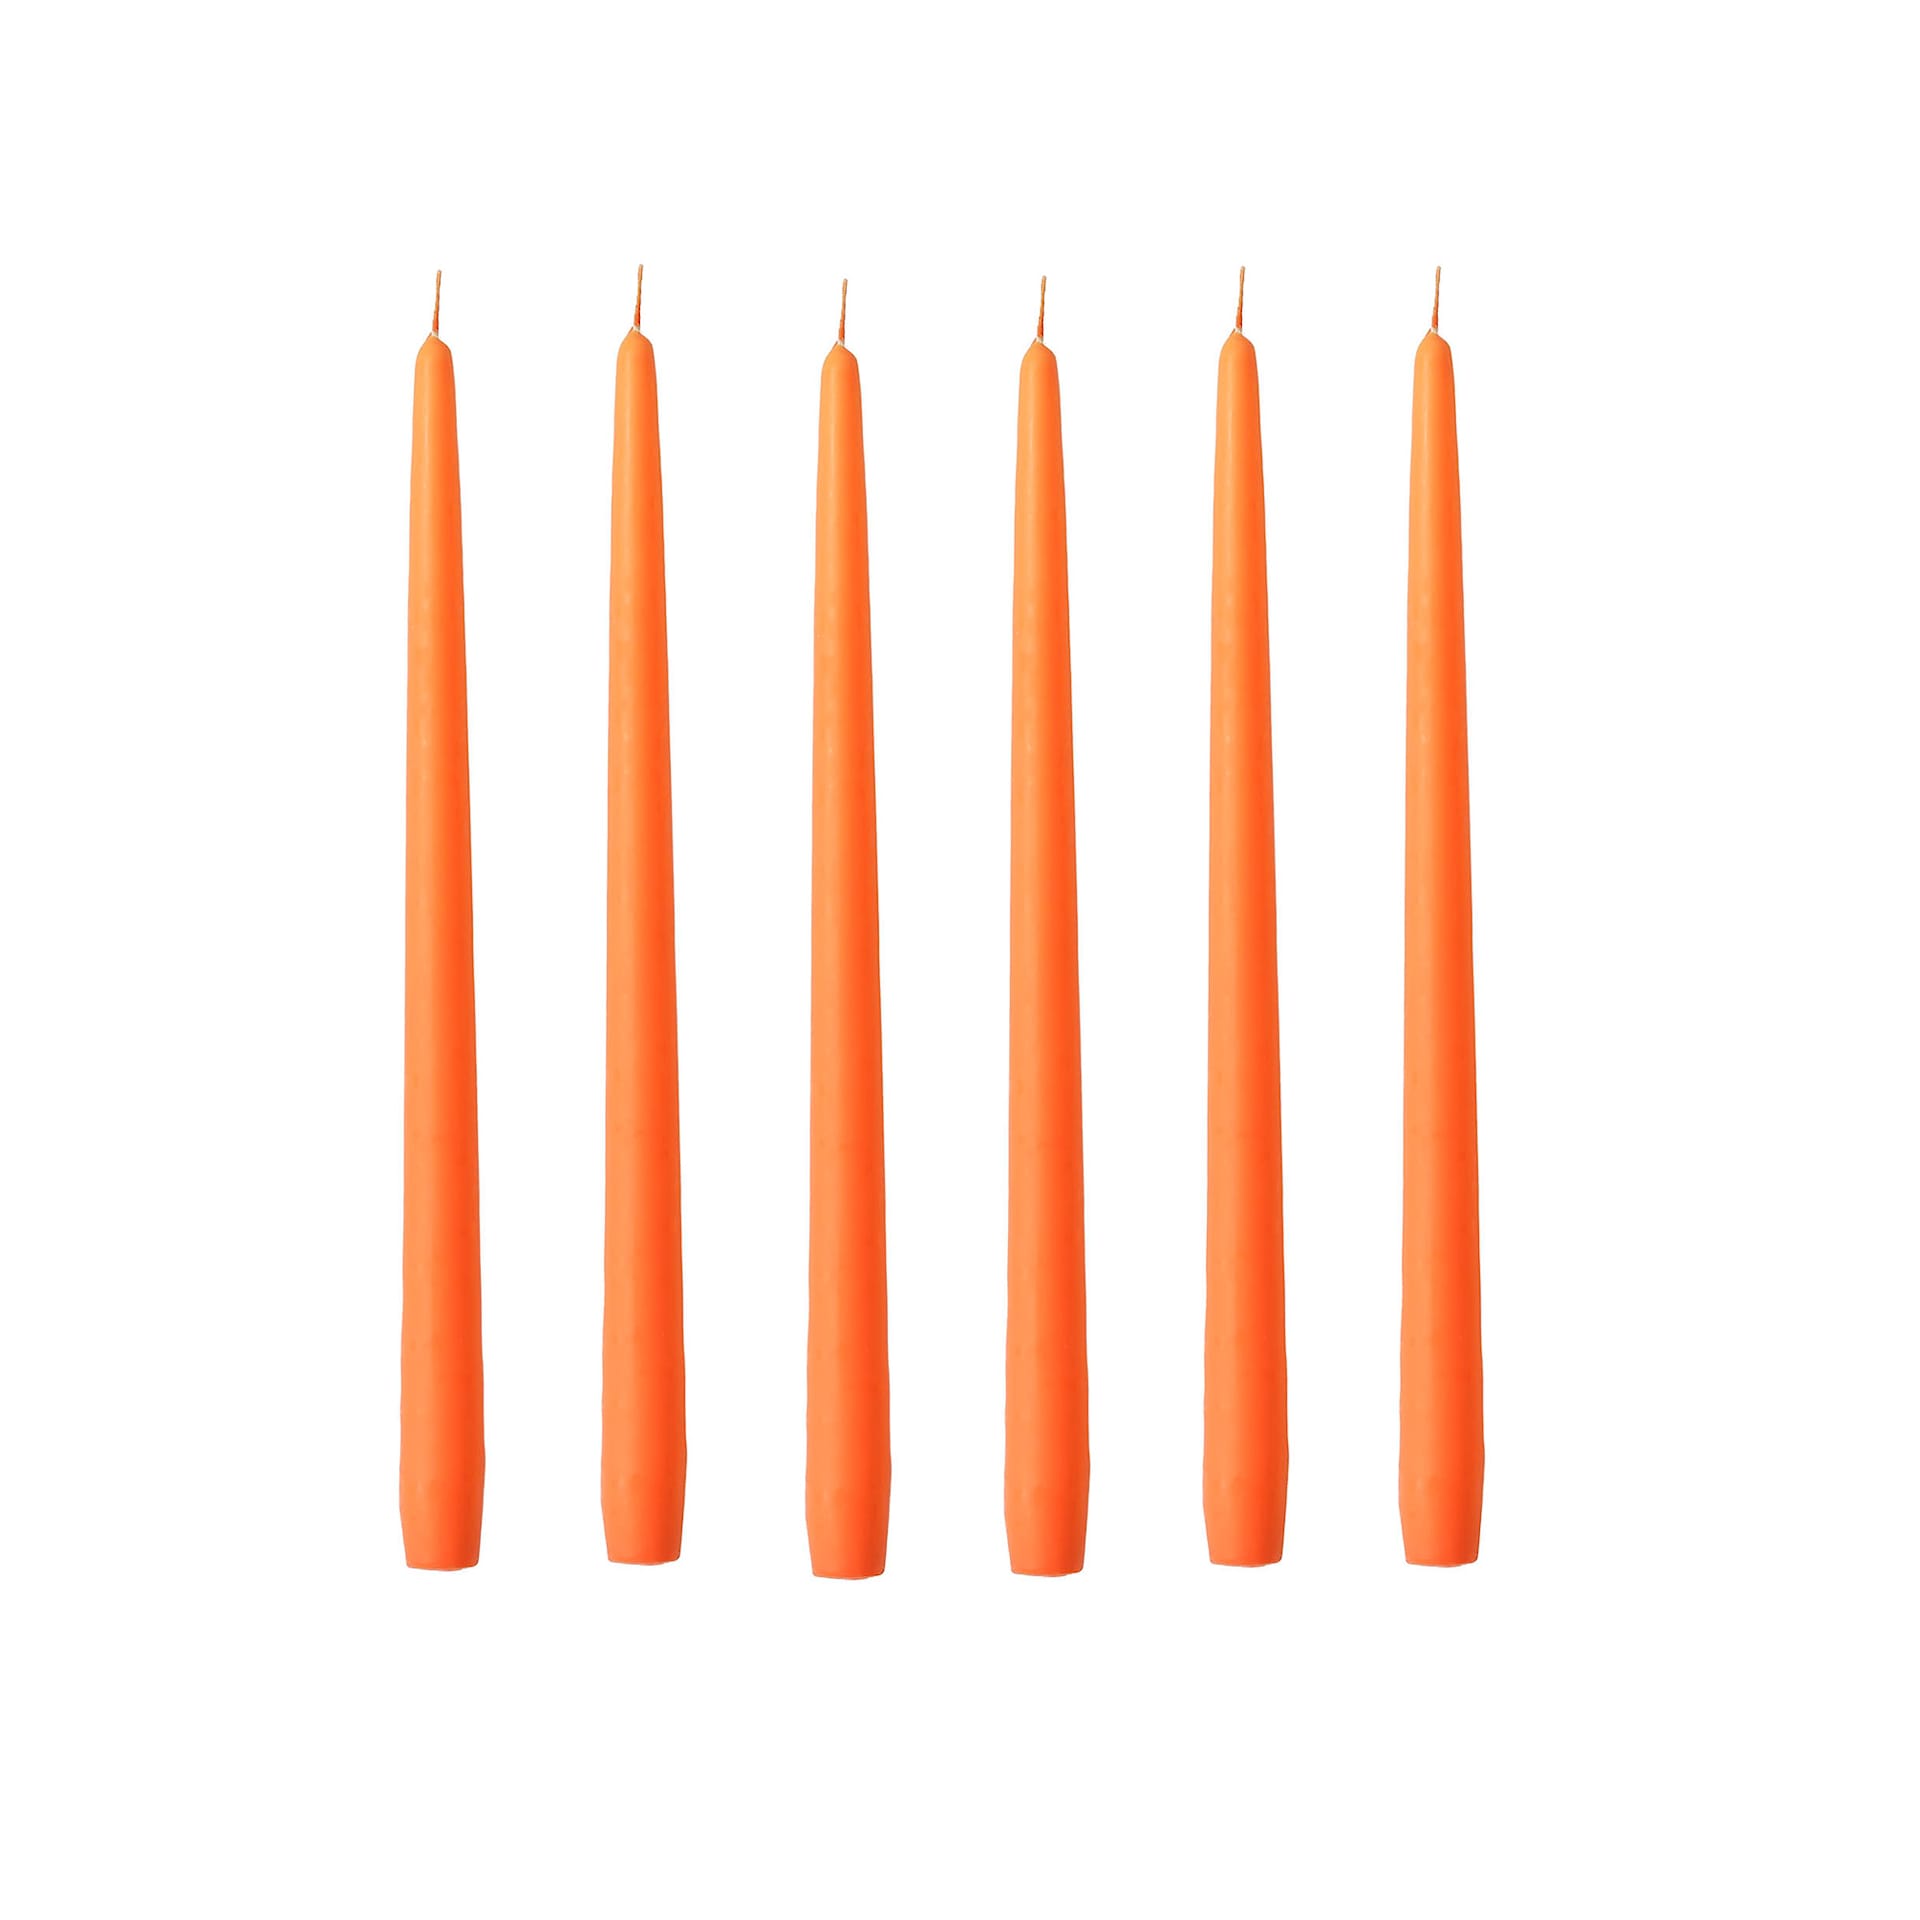 Nordiska Galleriet Candles Pack of 6 - Orange - Nordiska Galleriet - NO GA